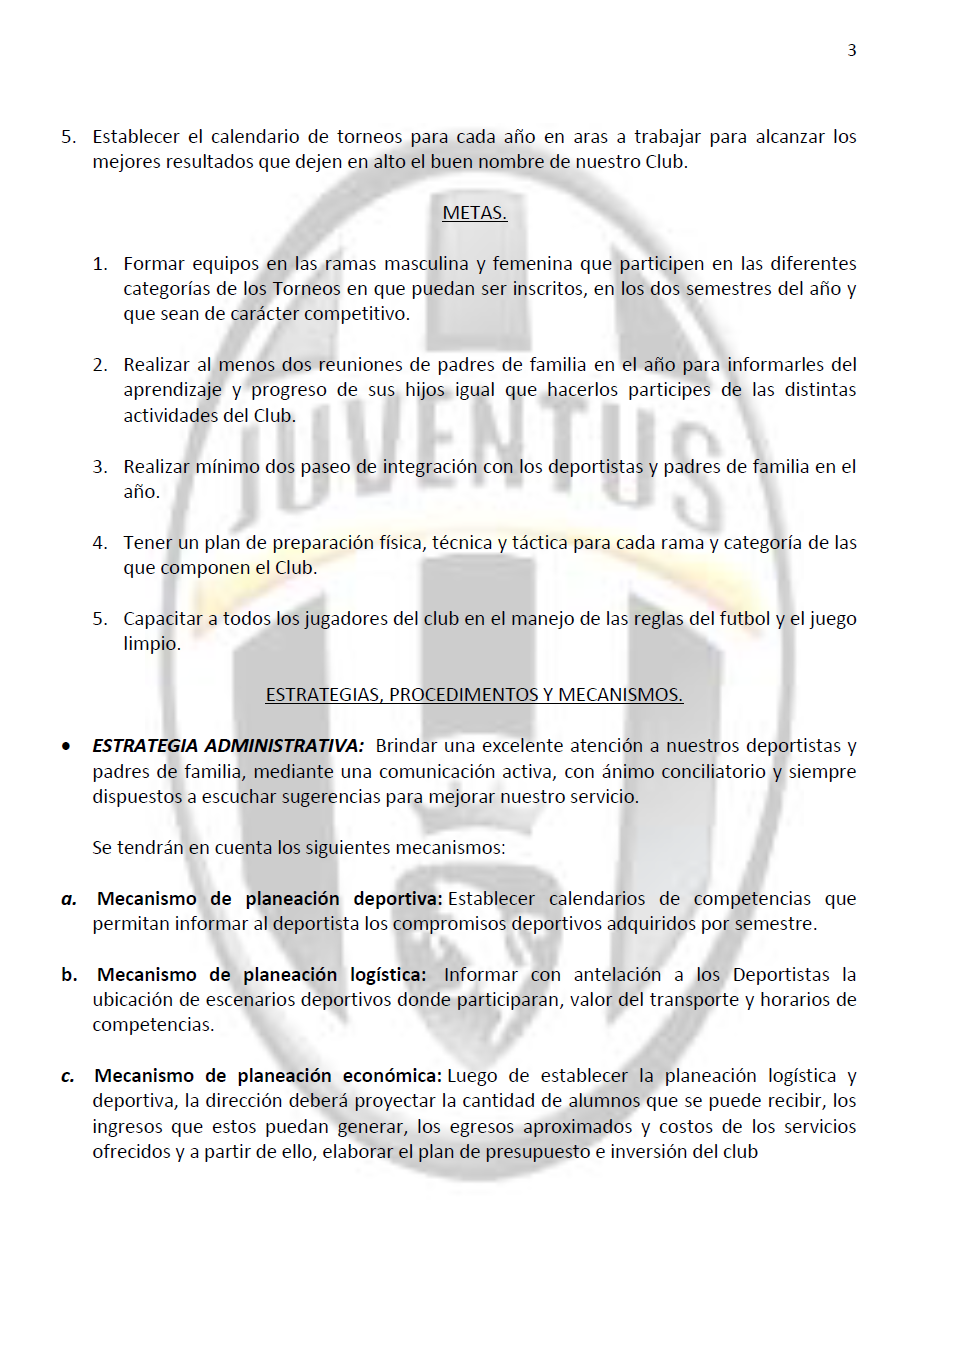 CLUB DEPORTIVO JUVENTUS CALI: Plan de Desarrollo Deportivo Club Deportivo  Juventus Cali